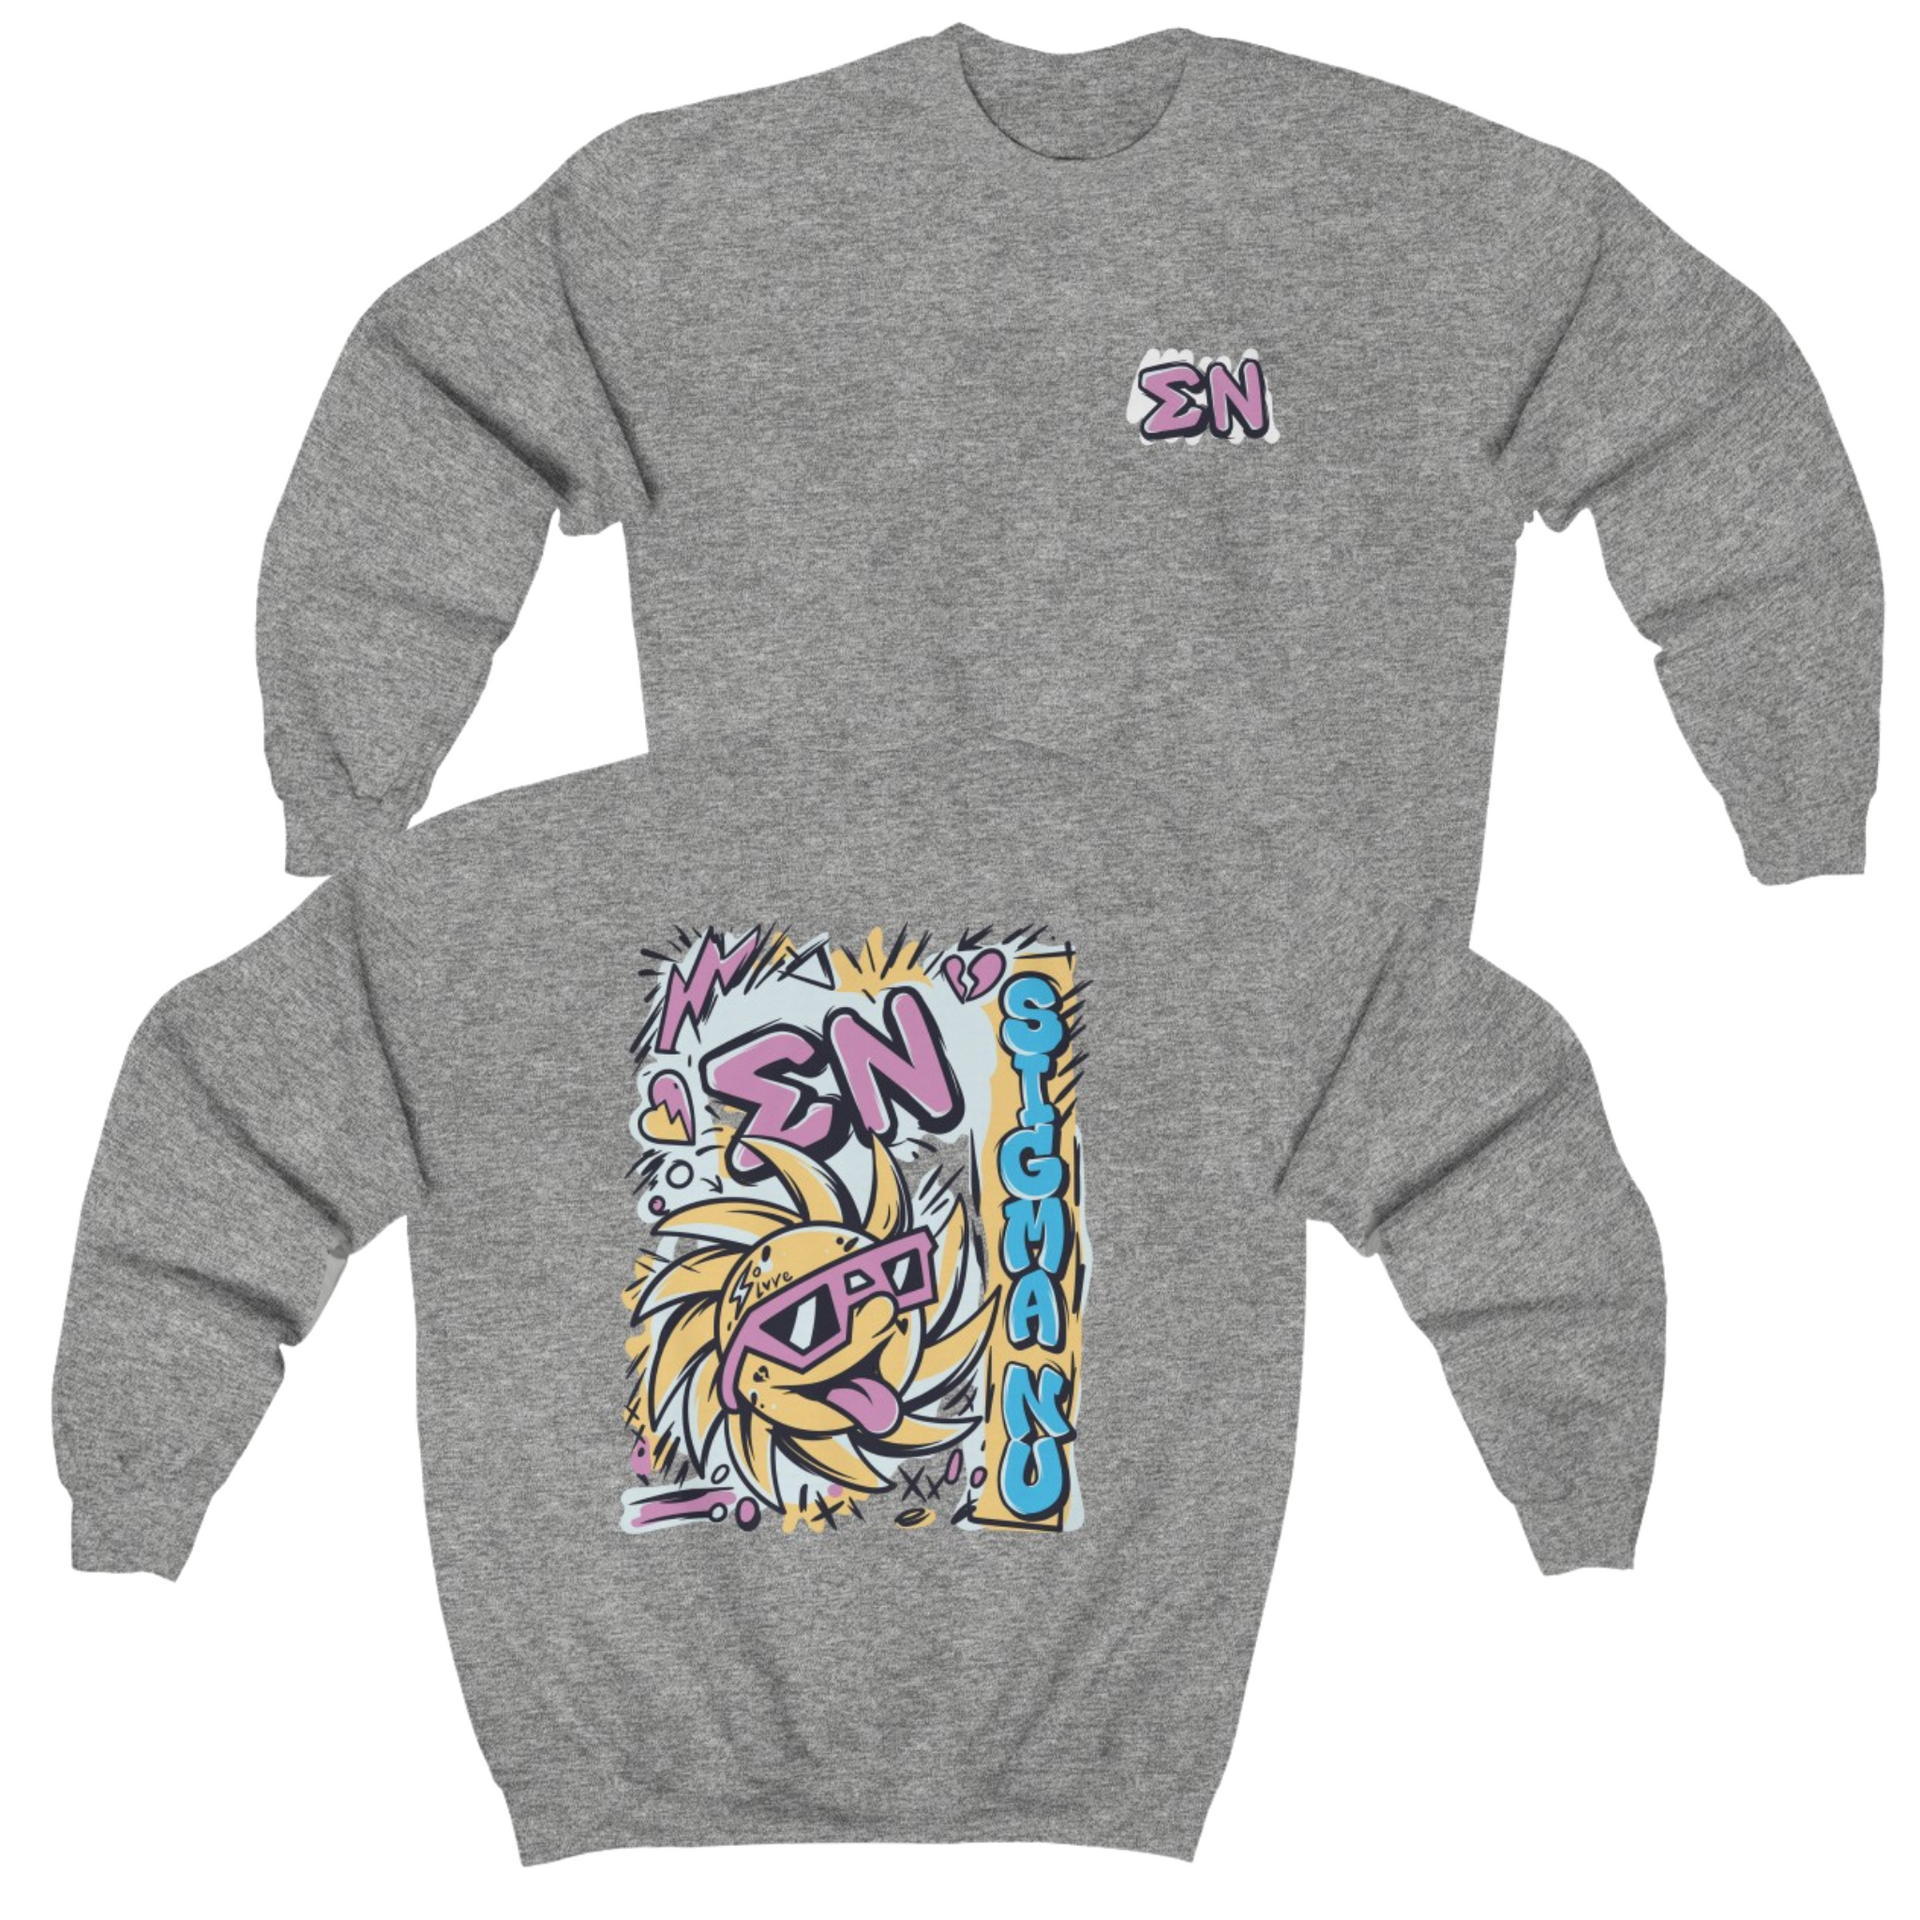 Grey Sigma Nu Graphic Crewneck Sweatshirt | Fun in the Sun | Sigma Nu Clothing, Apparel and Merchandise